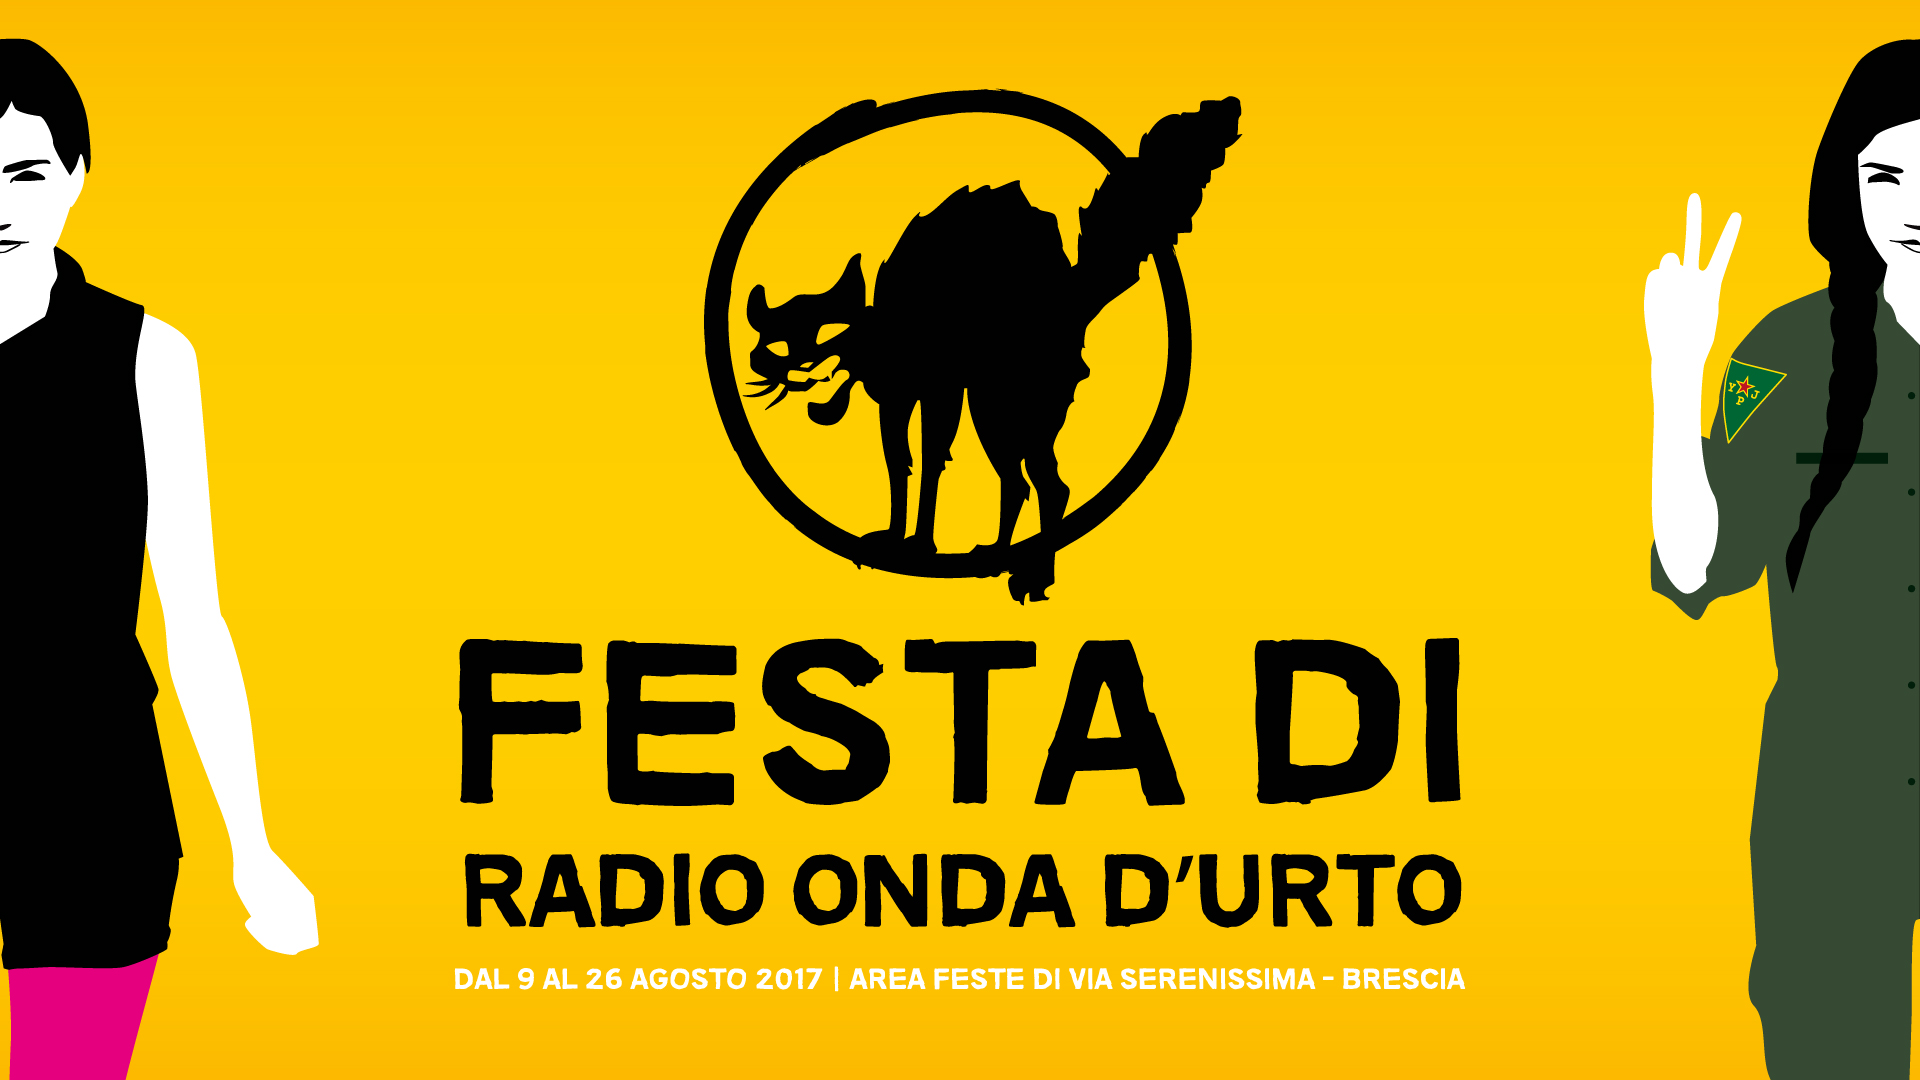 Live @ festa radio onda d’urto 2017-16 agosto